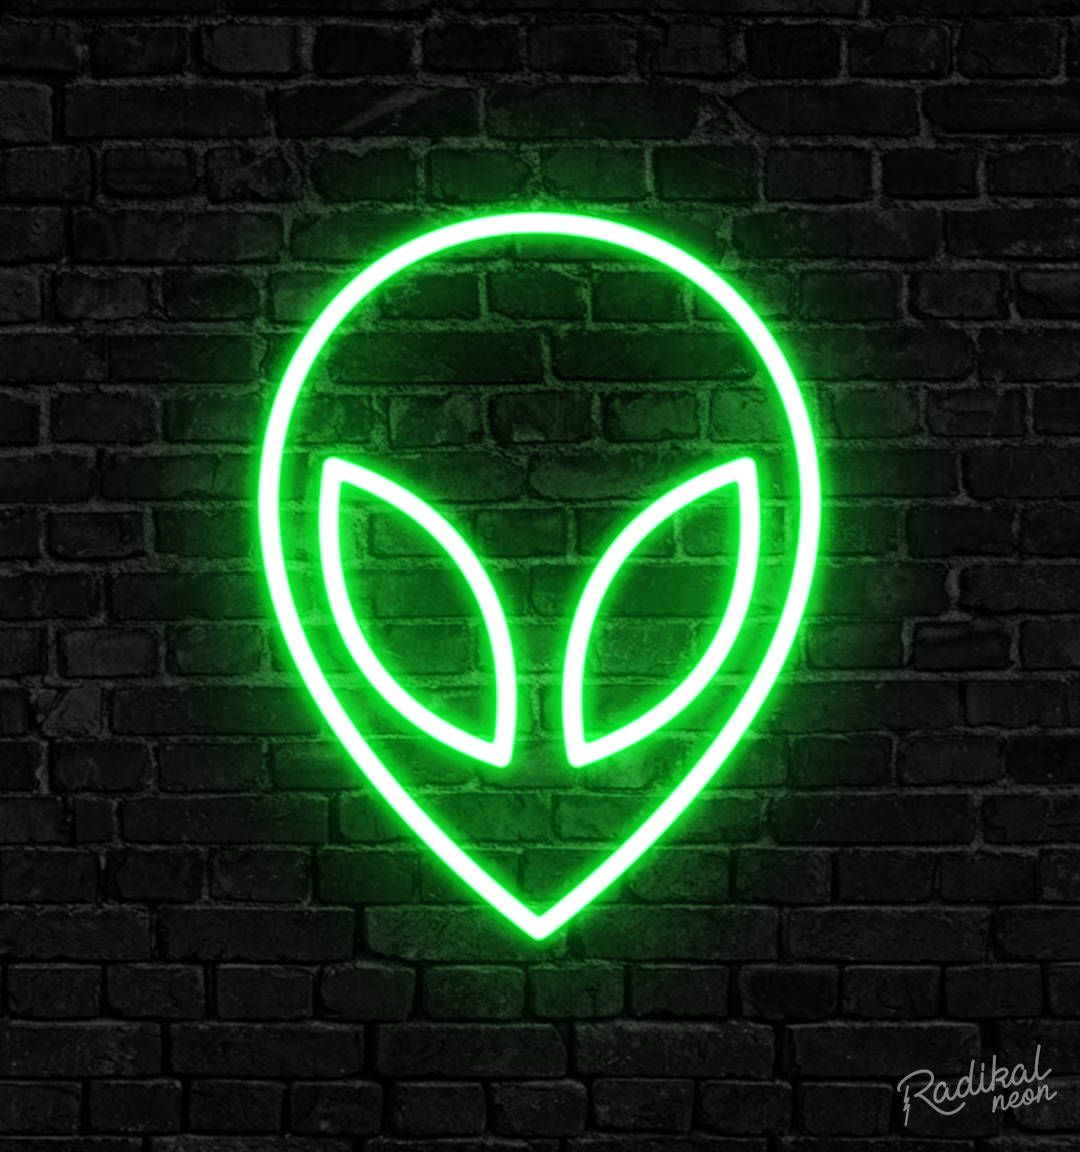 A neon sign of an alien's face on a brick wall - Neon green, alien